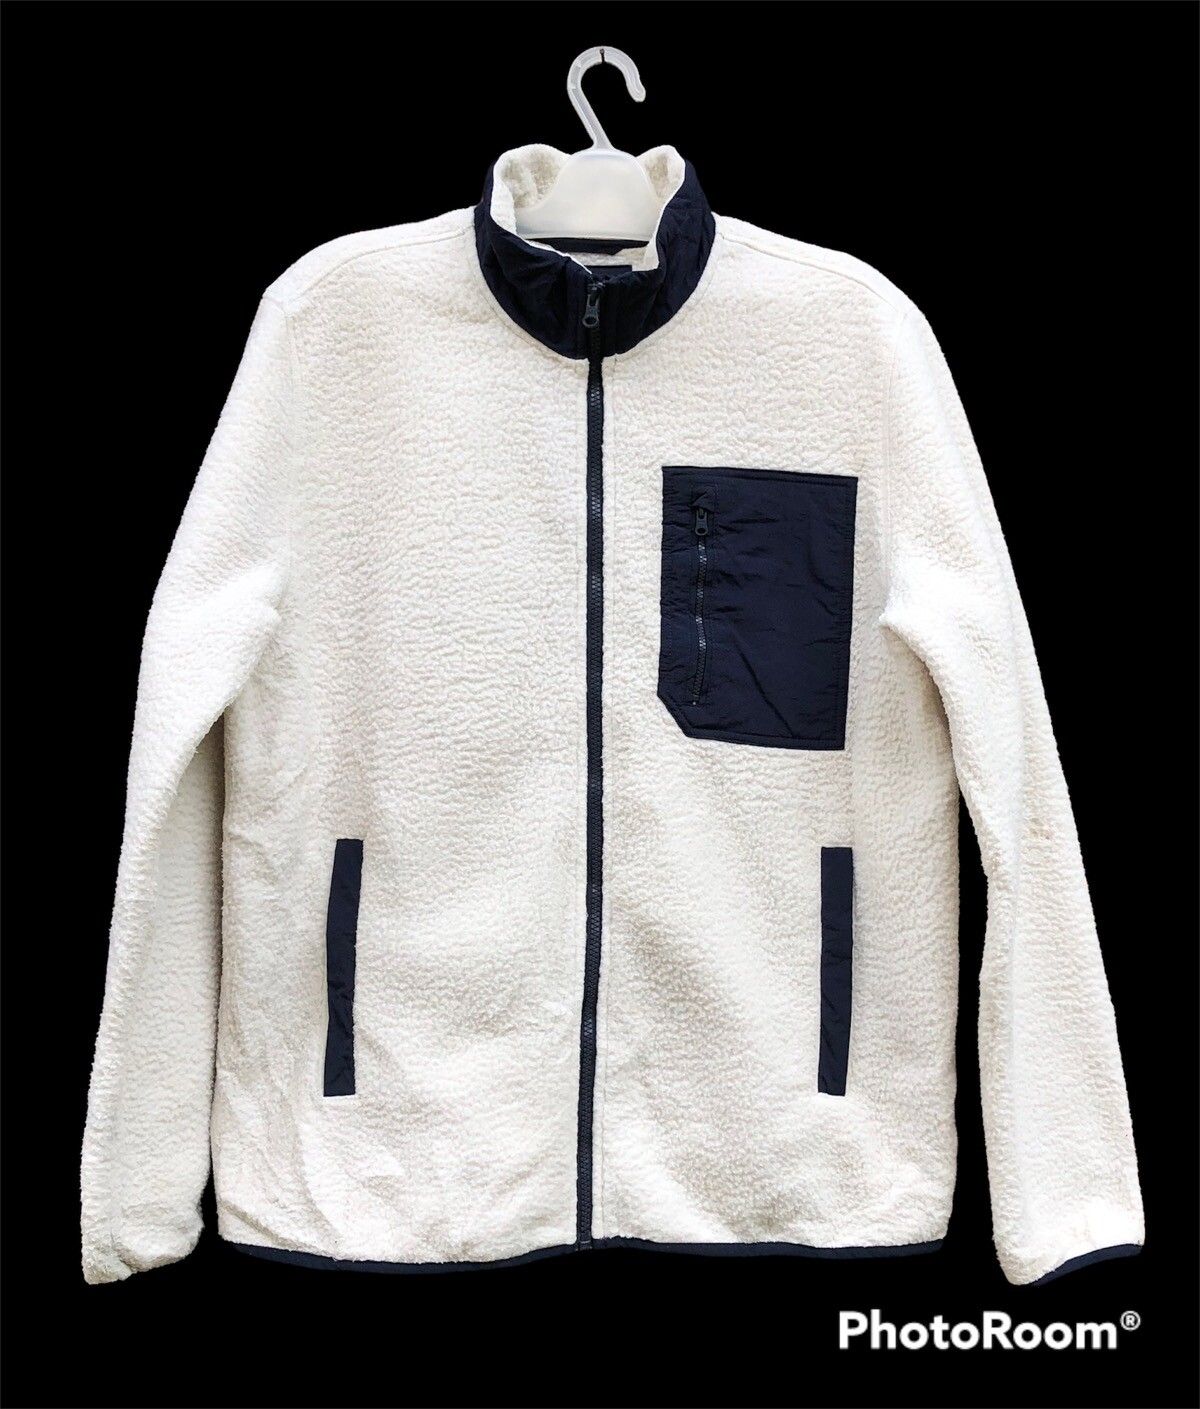 Gap GAP fleece jacket x single pocket | Grailed